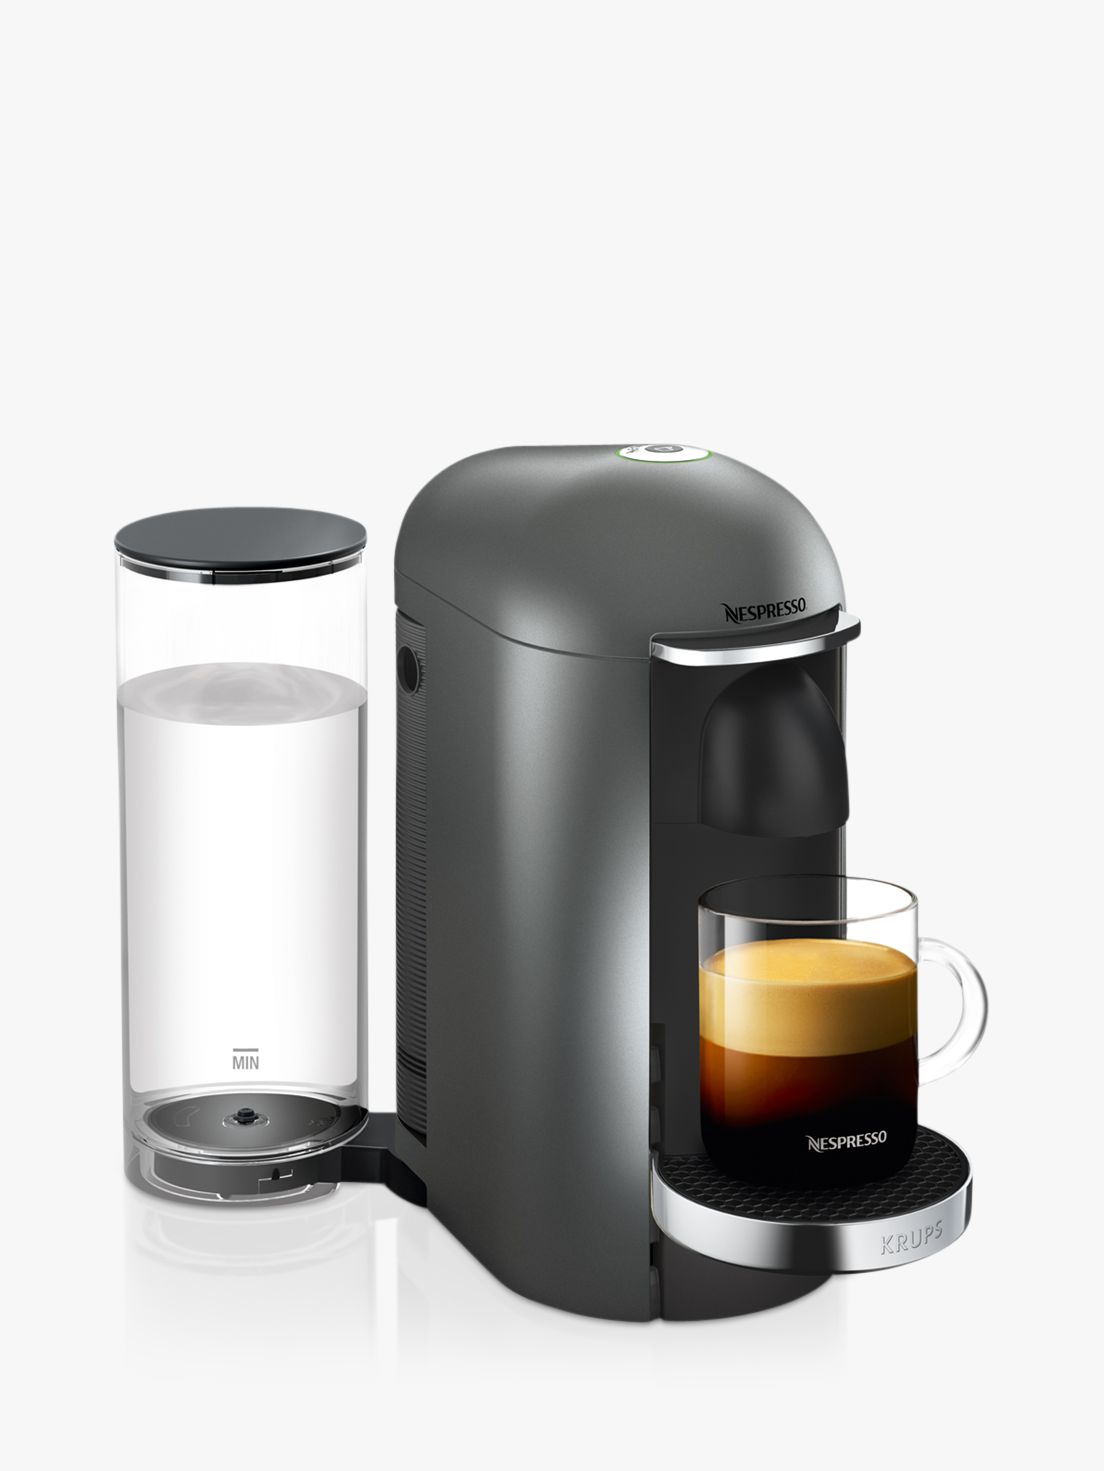 Nespresso Vertuo Plus Coffee Machine by Krups